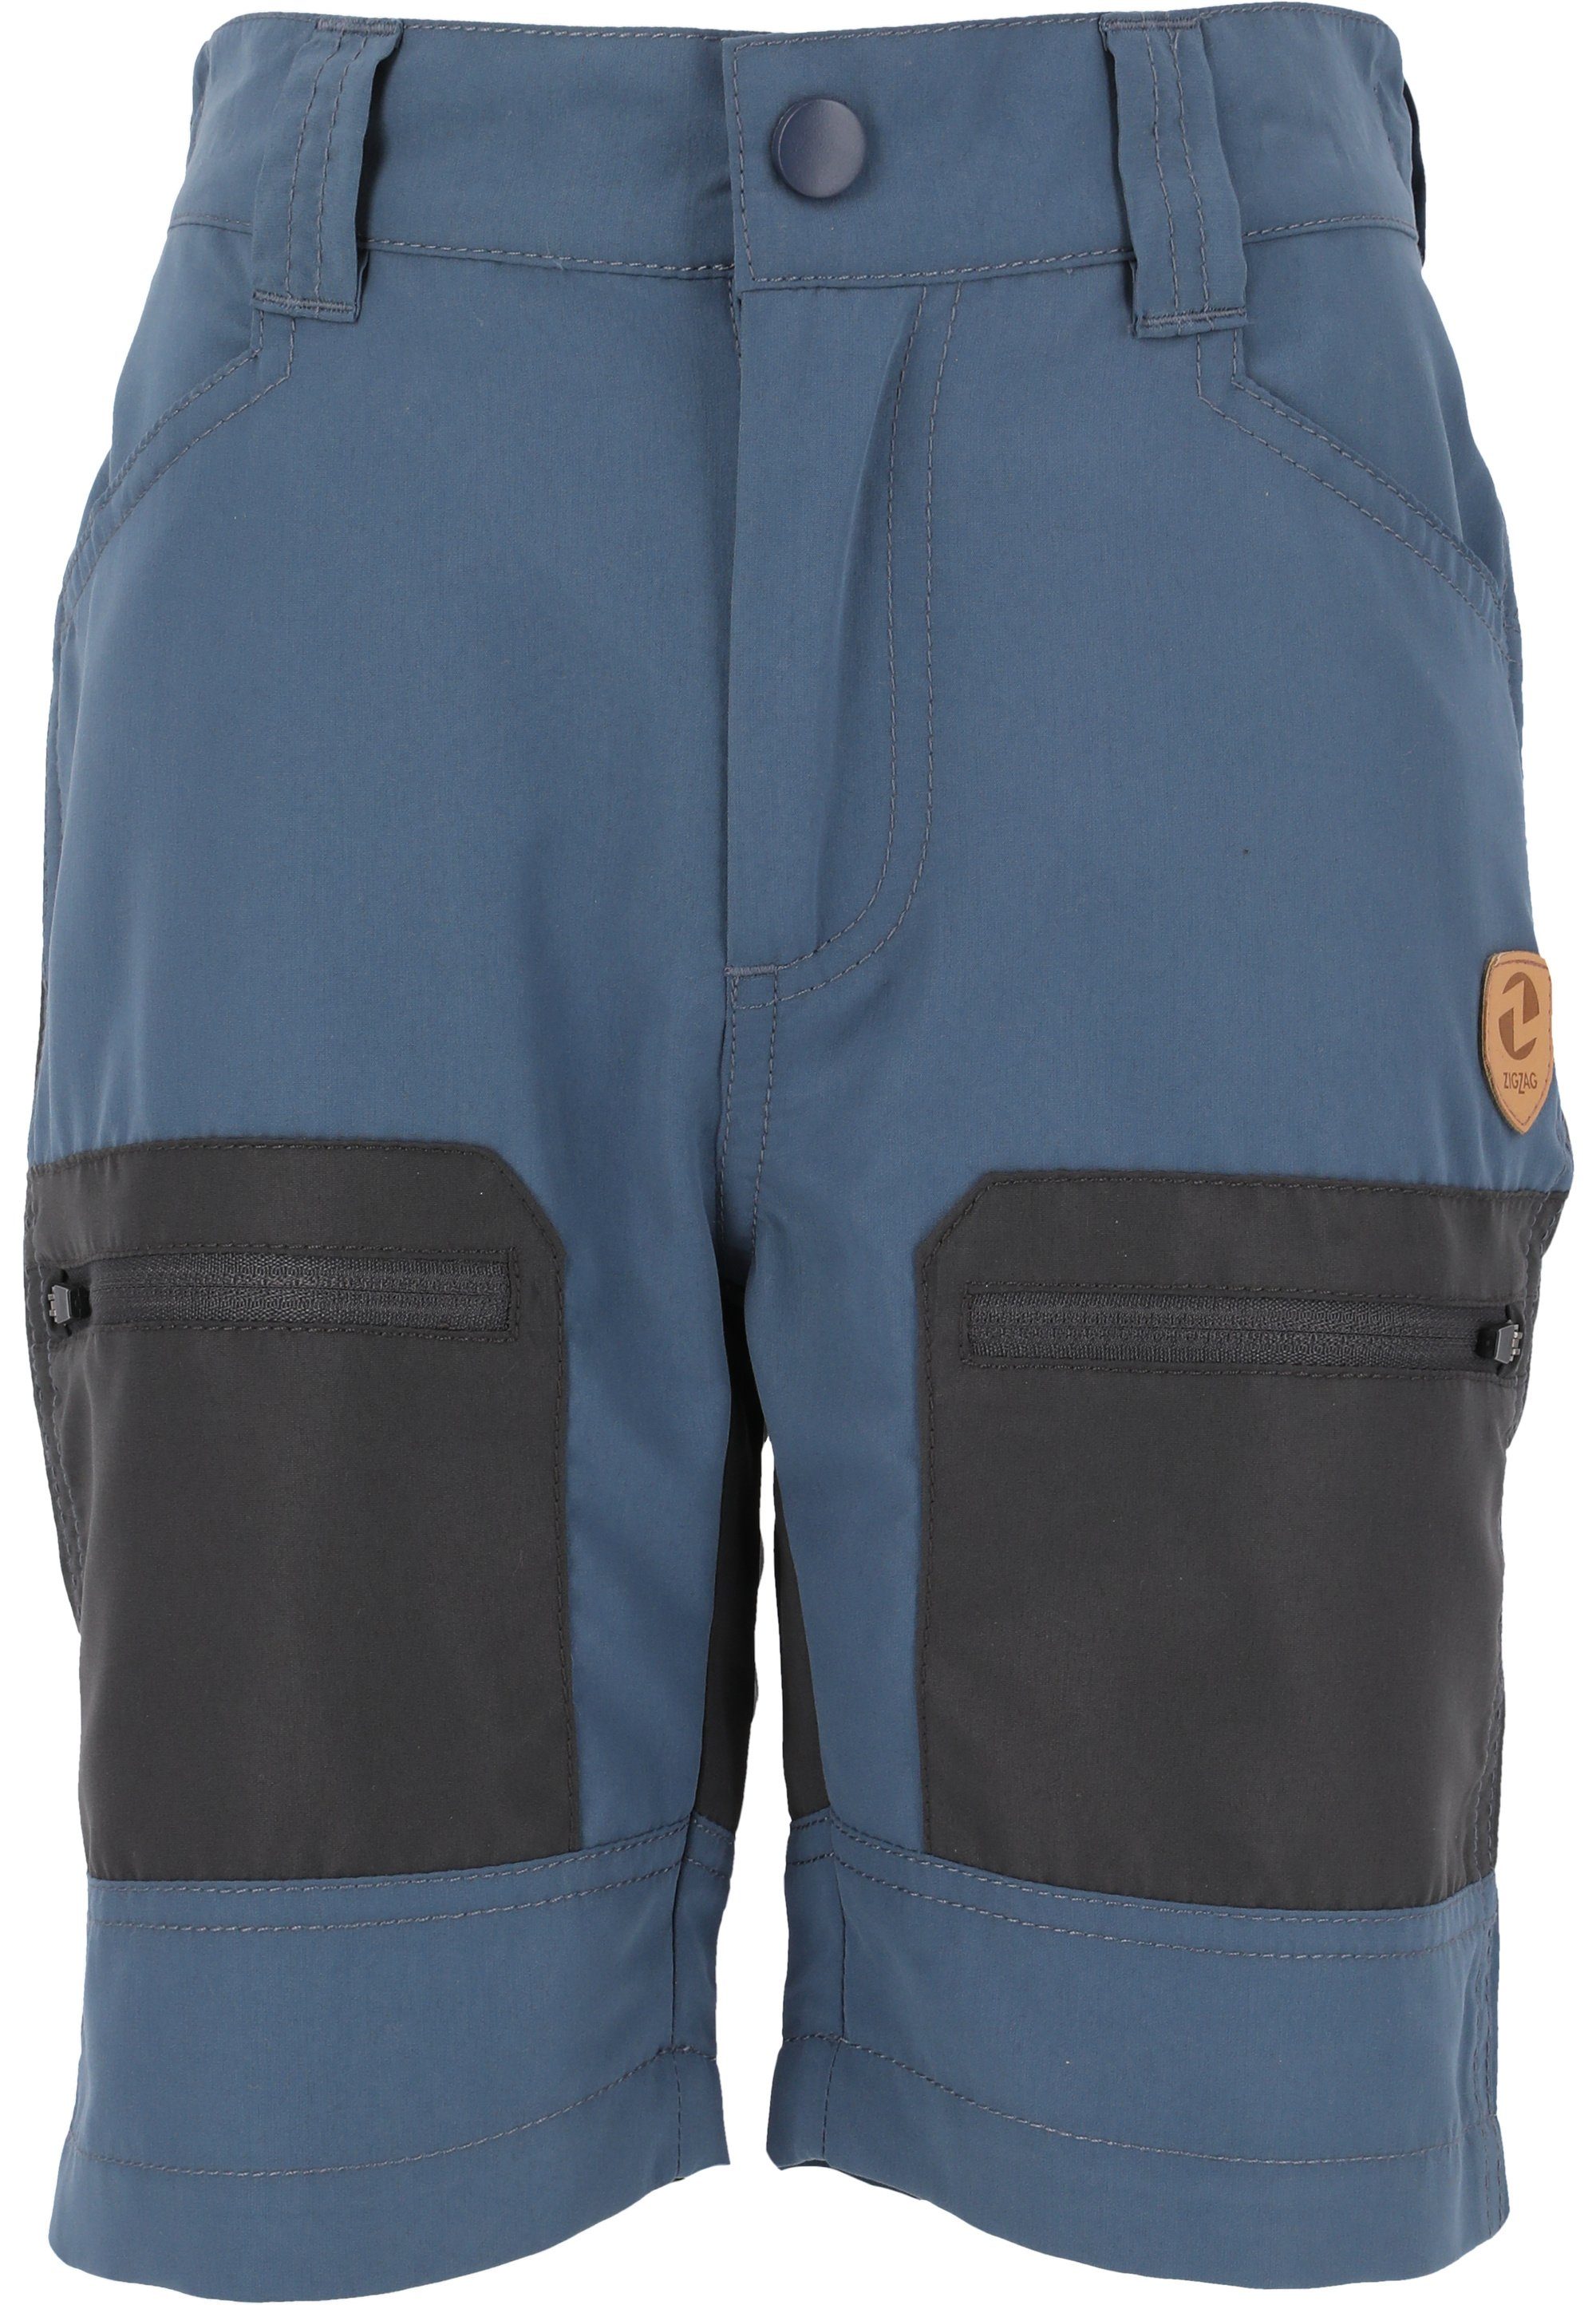 blau-schwarz robustem aus ZIGZAG Atlantic Shorts Material